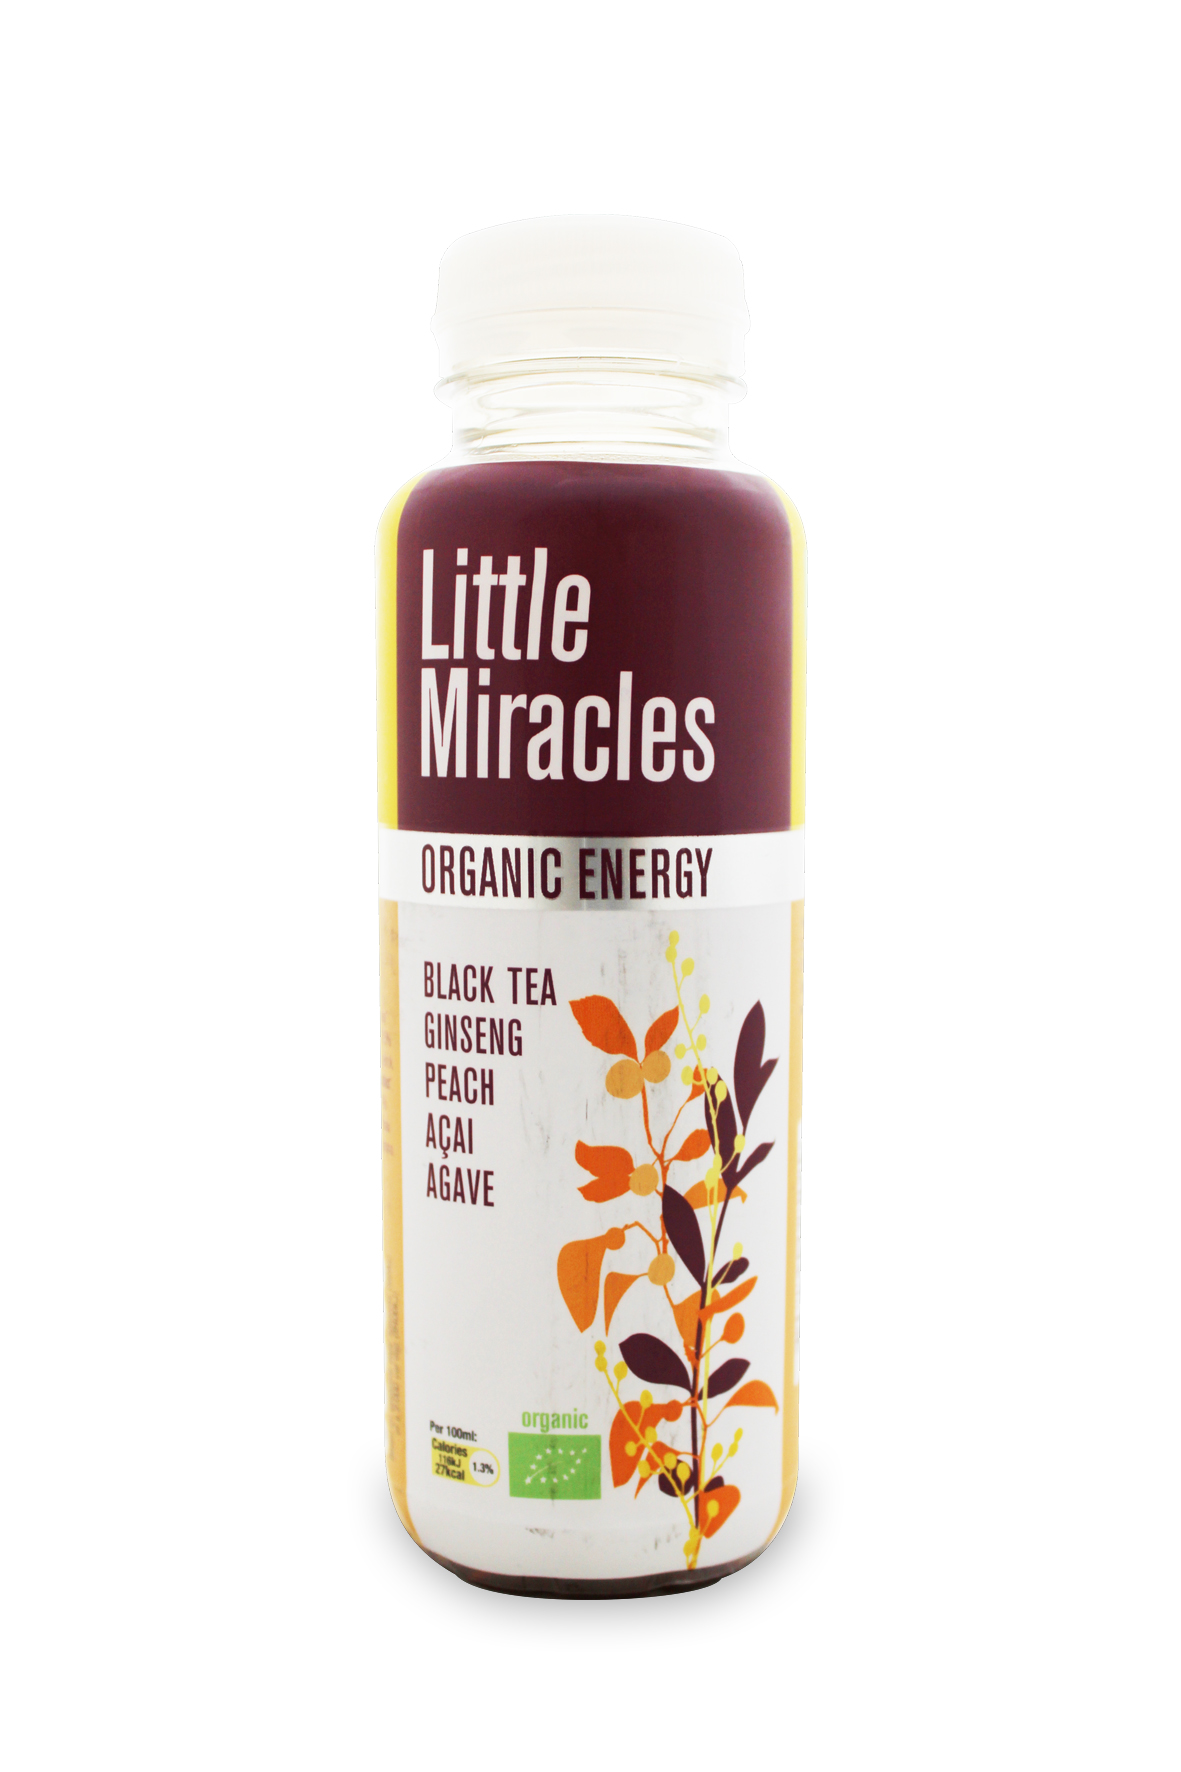 Little Miracles energy drink BIO flavored black tea, ginseng, peach, acai